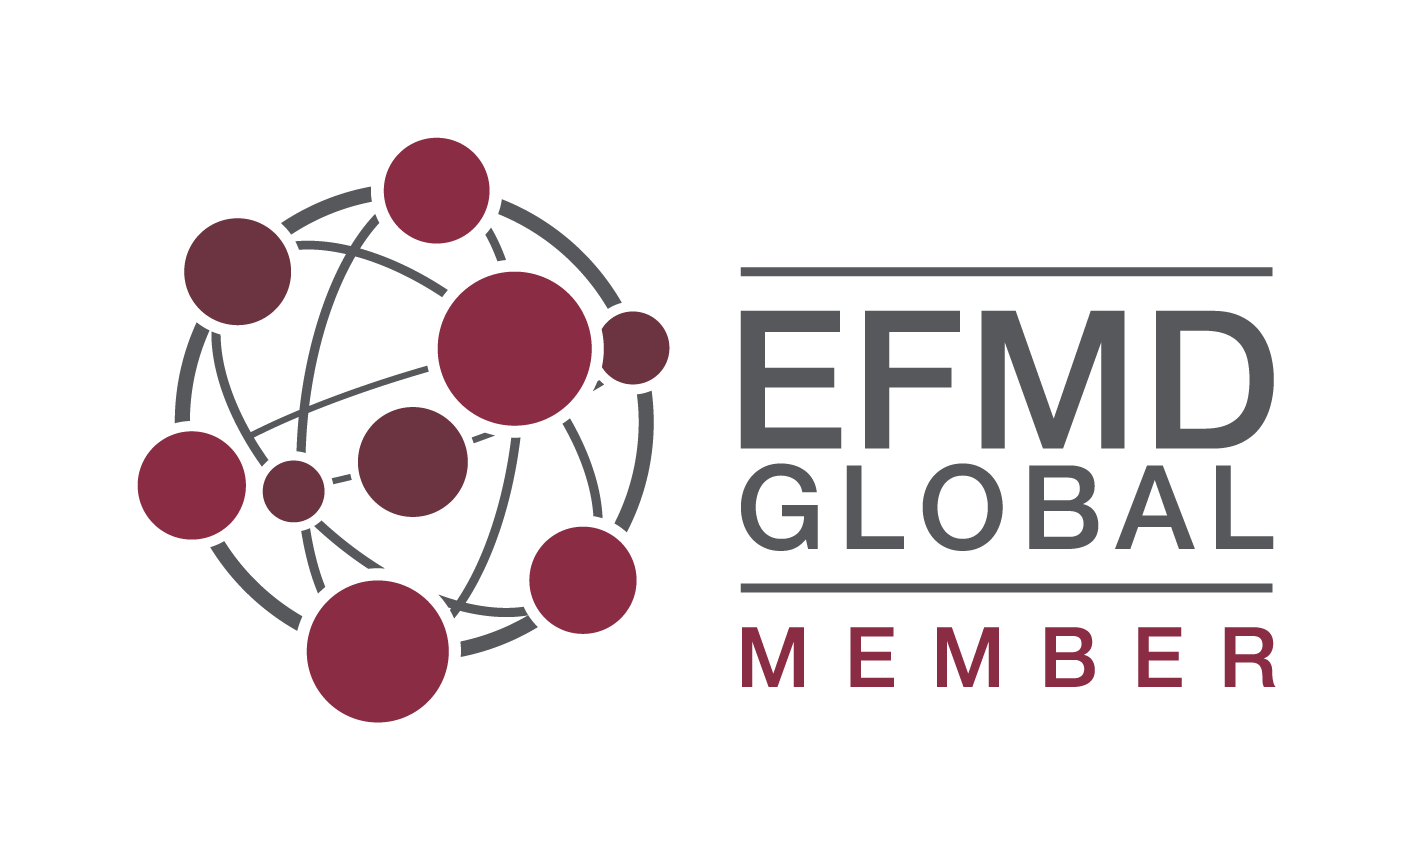 EFMD-Global_Member-H-Pantone